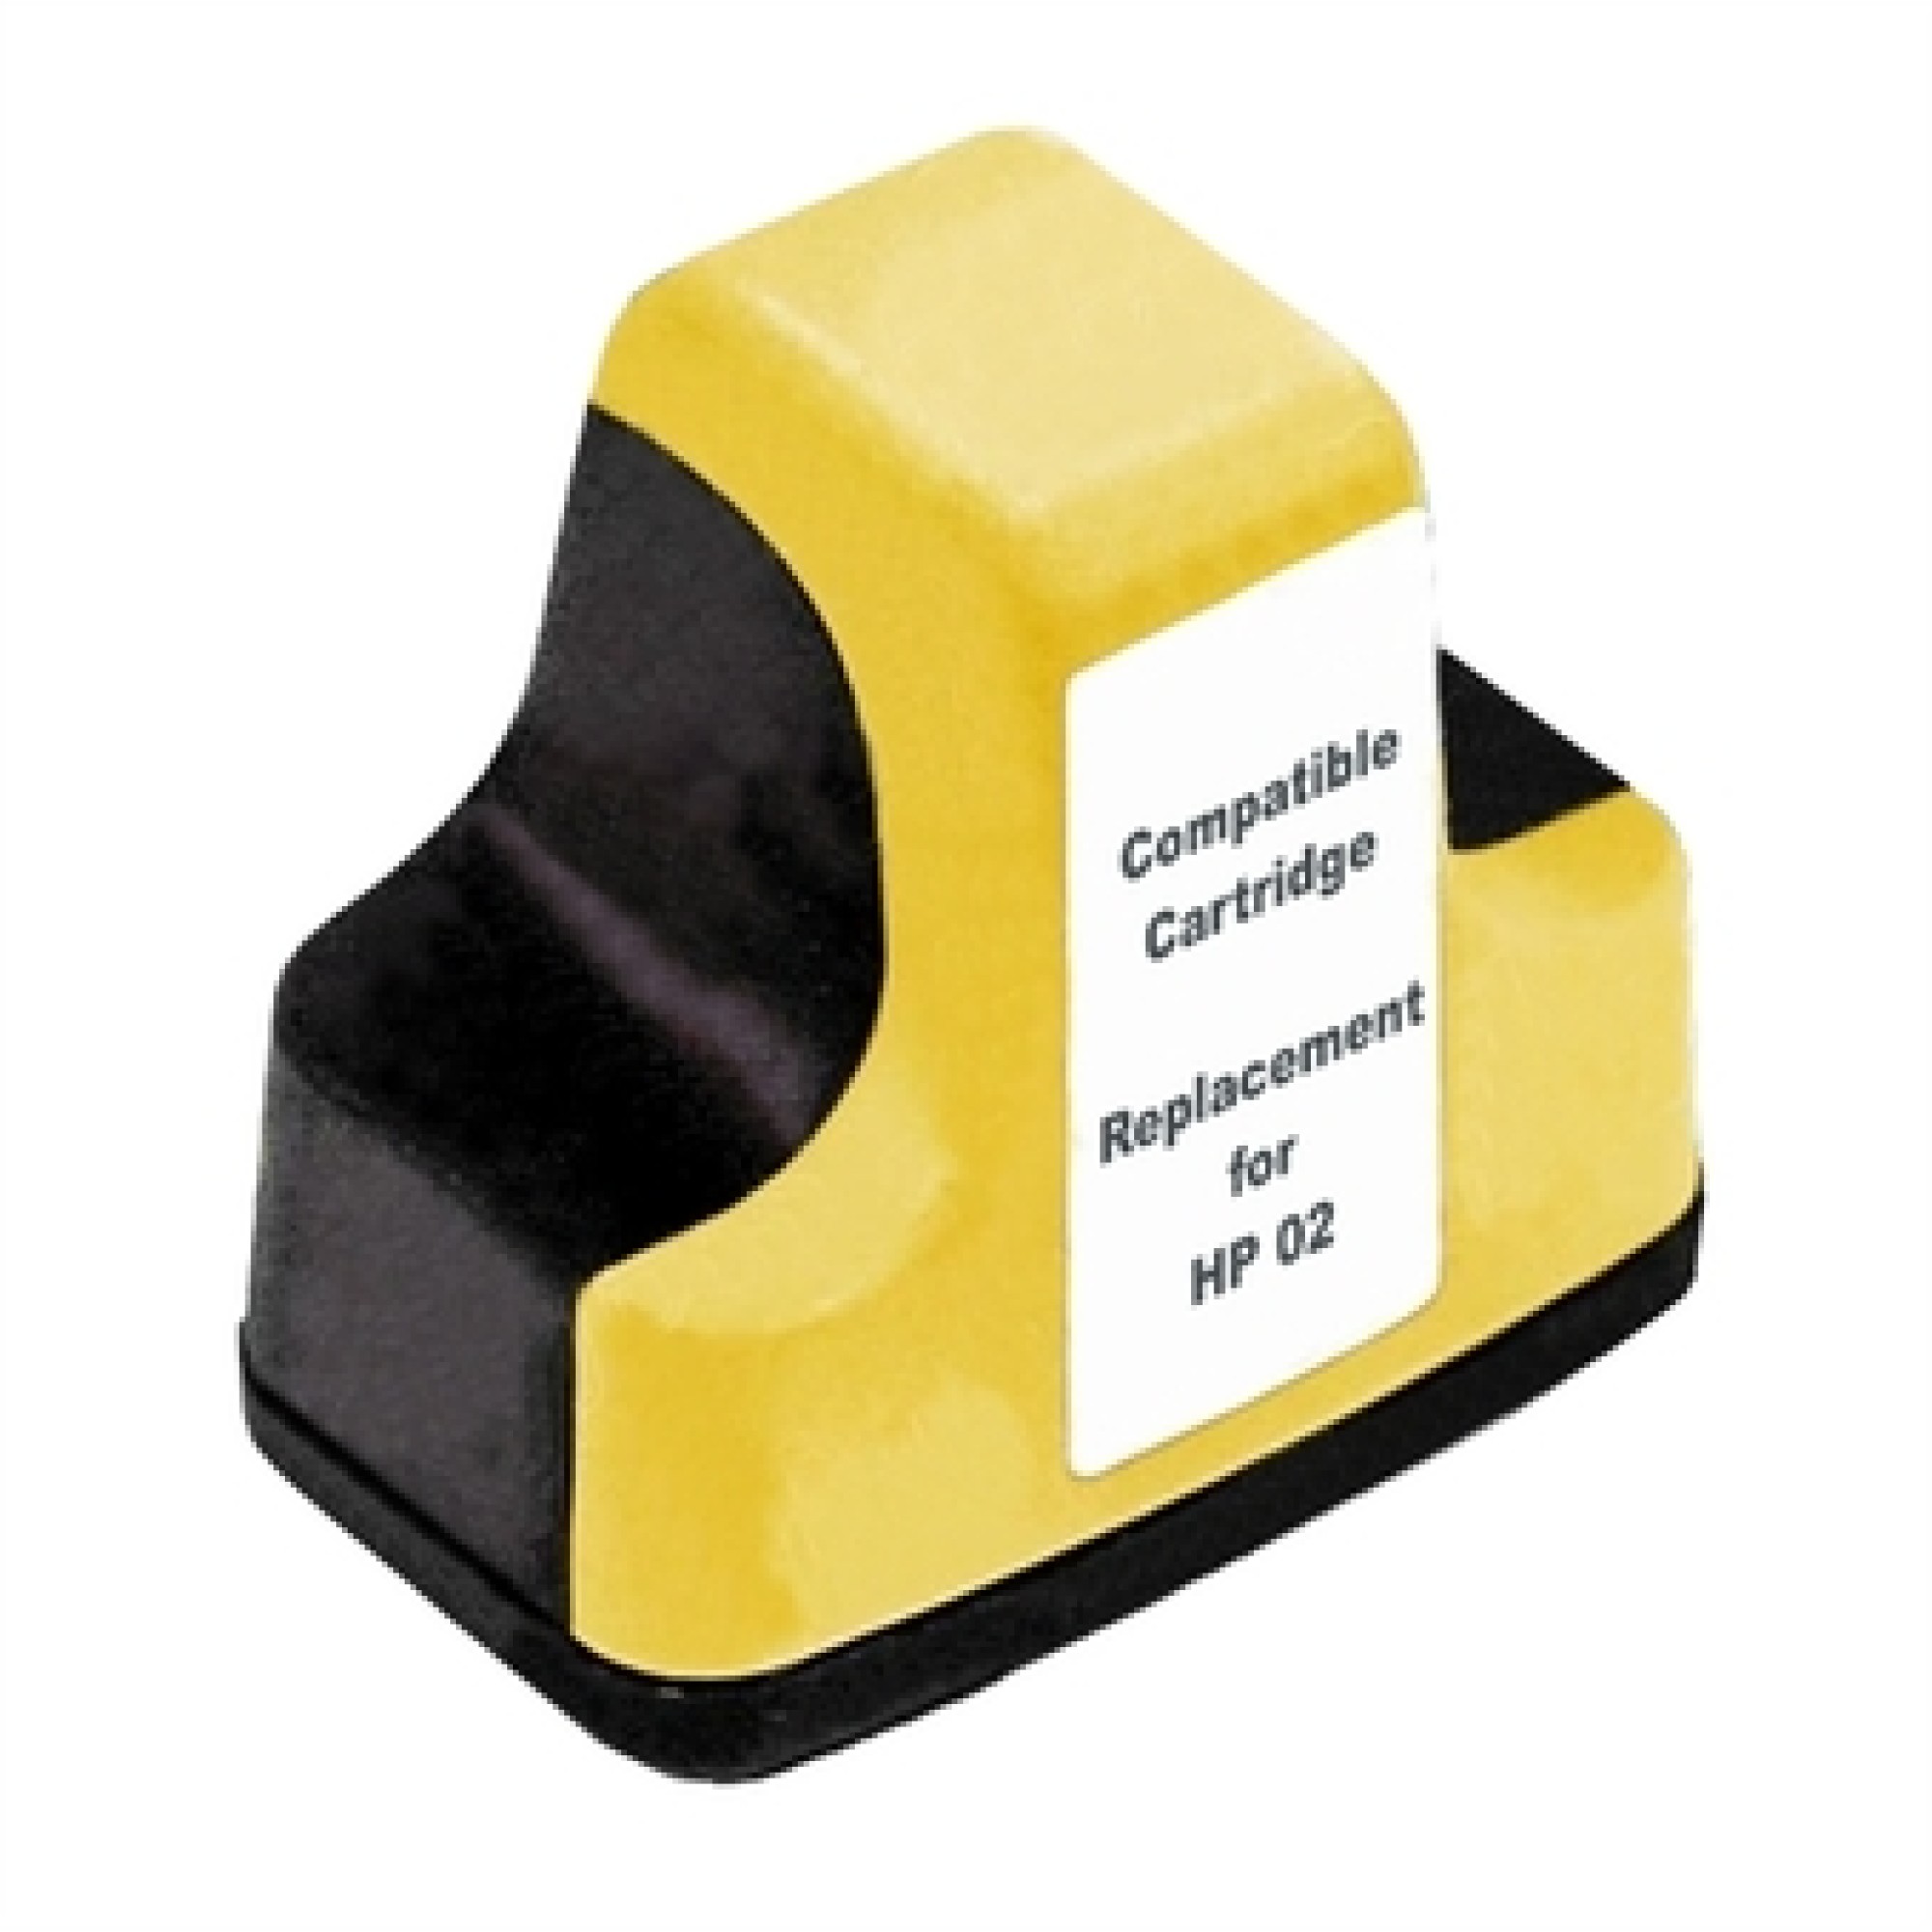 HP 02 / HP02 / HP02xl Compatible Ink Cartridge Yellow